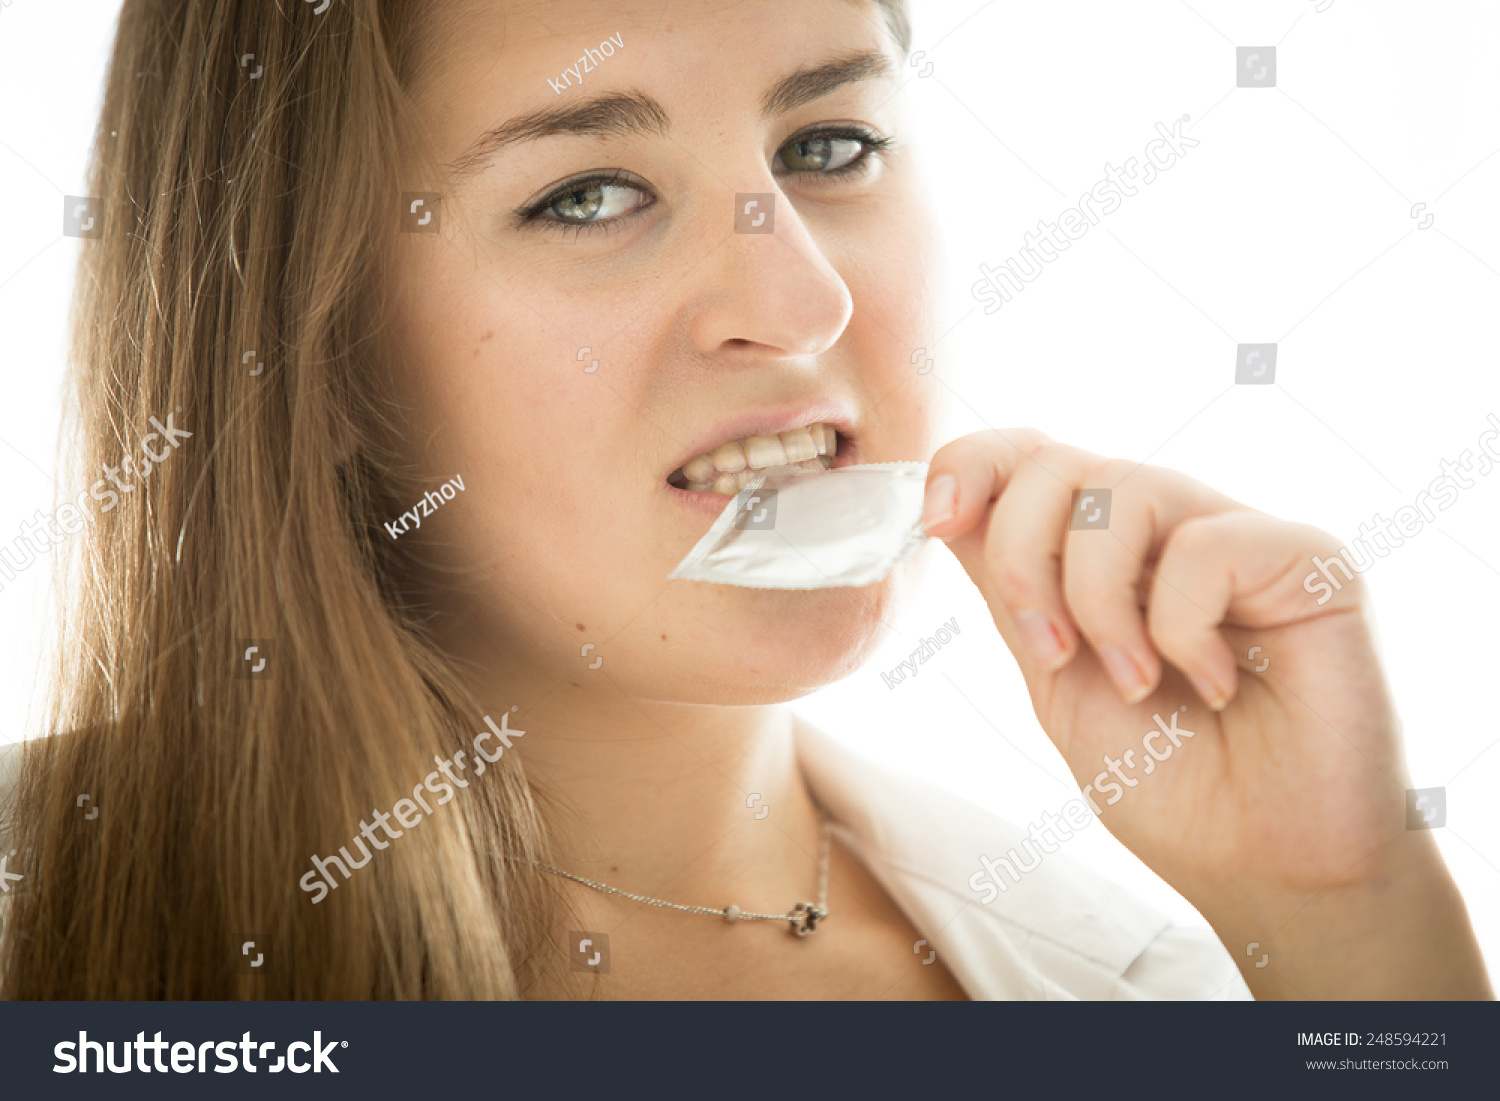 Девочка с презиком во рту